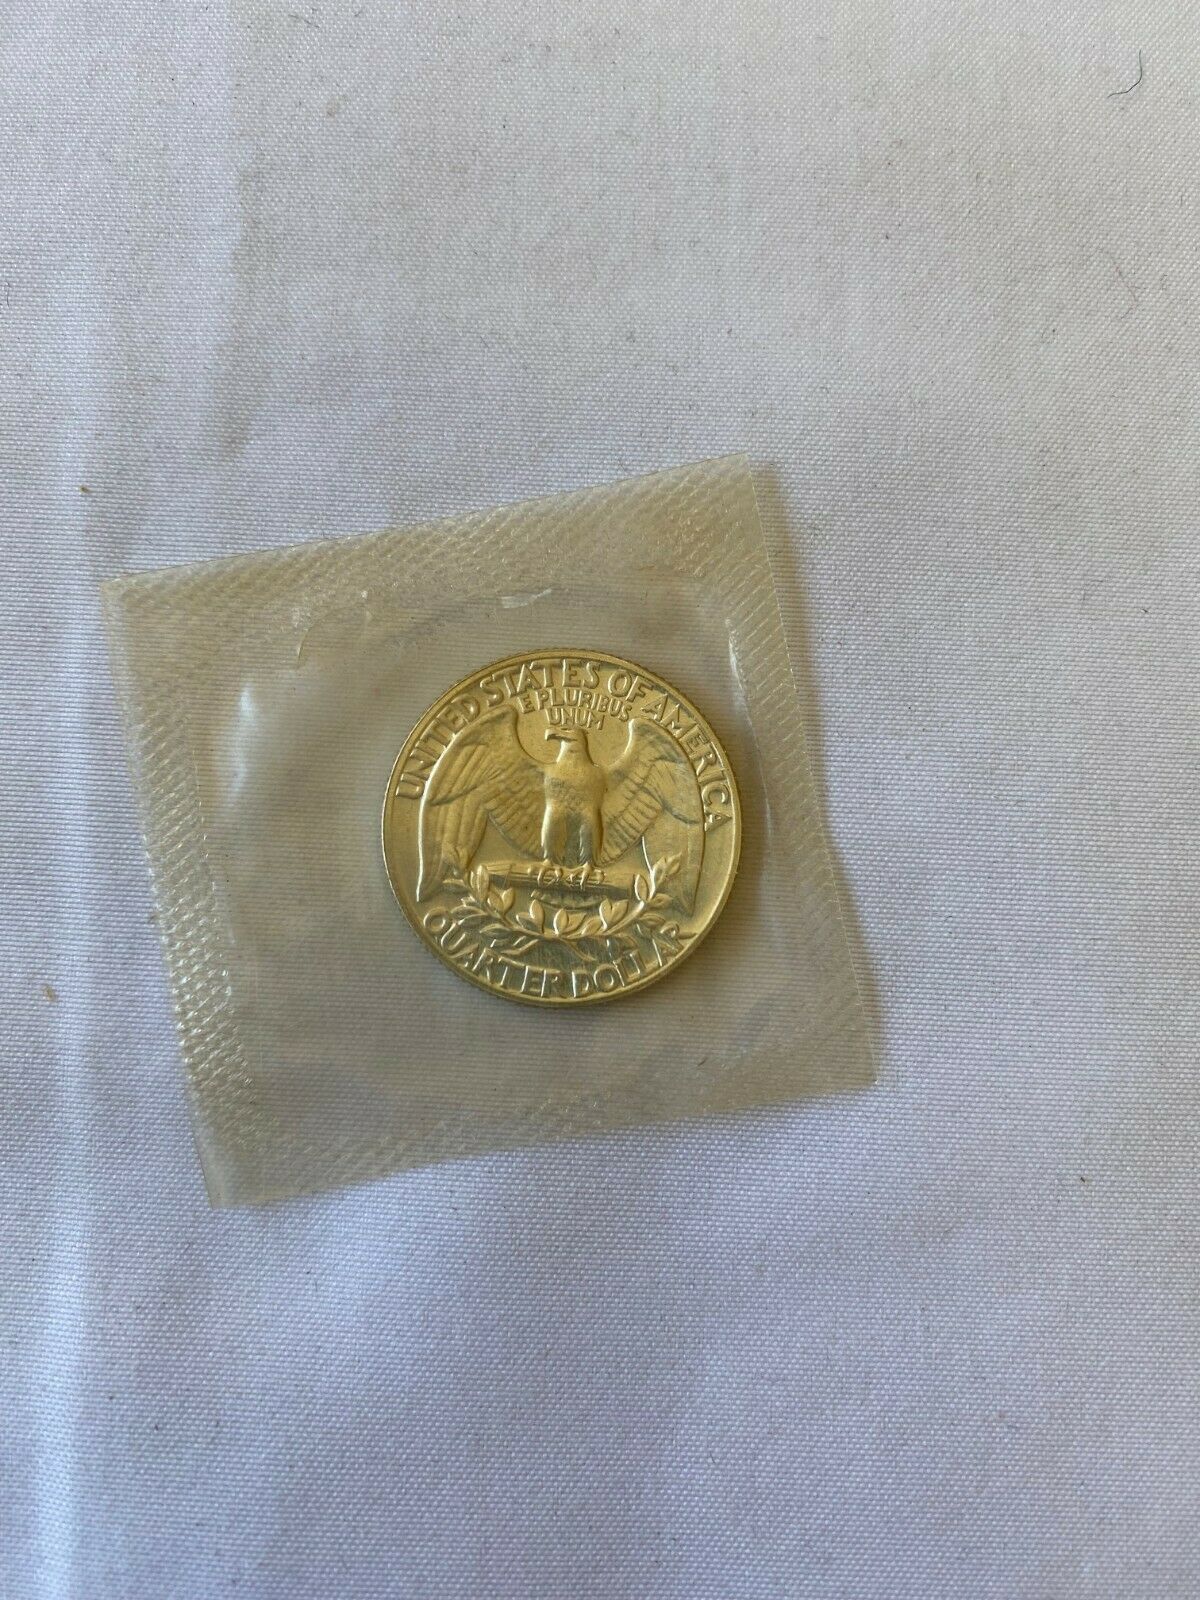 1959 Washington Quarter 25c Silver Proof UNC Coin Sealed in Original Mint Cello